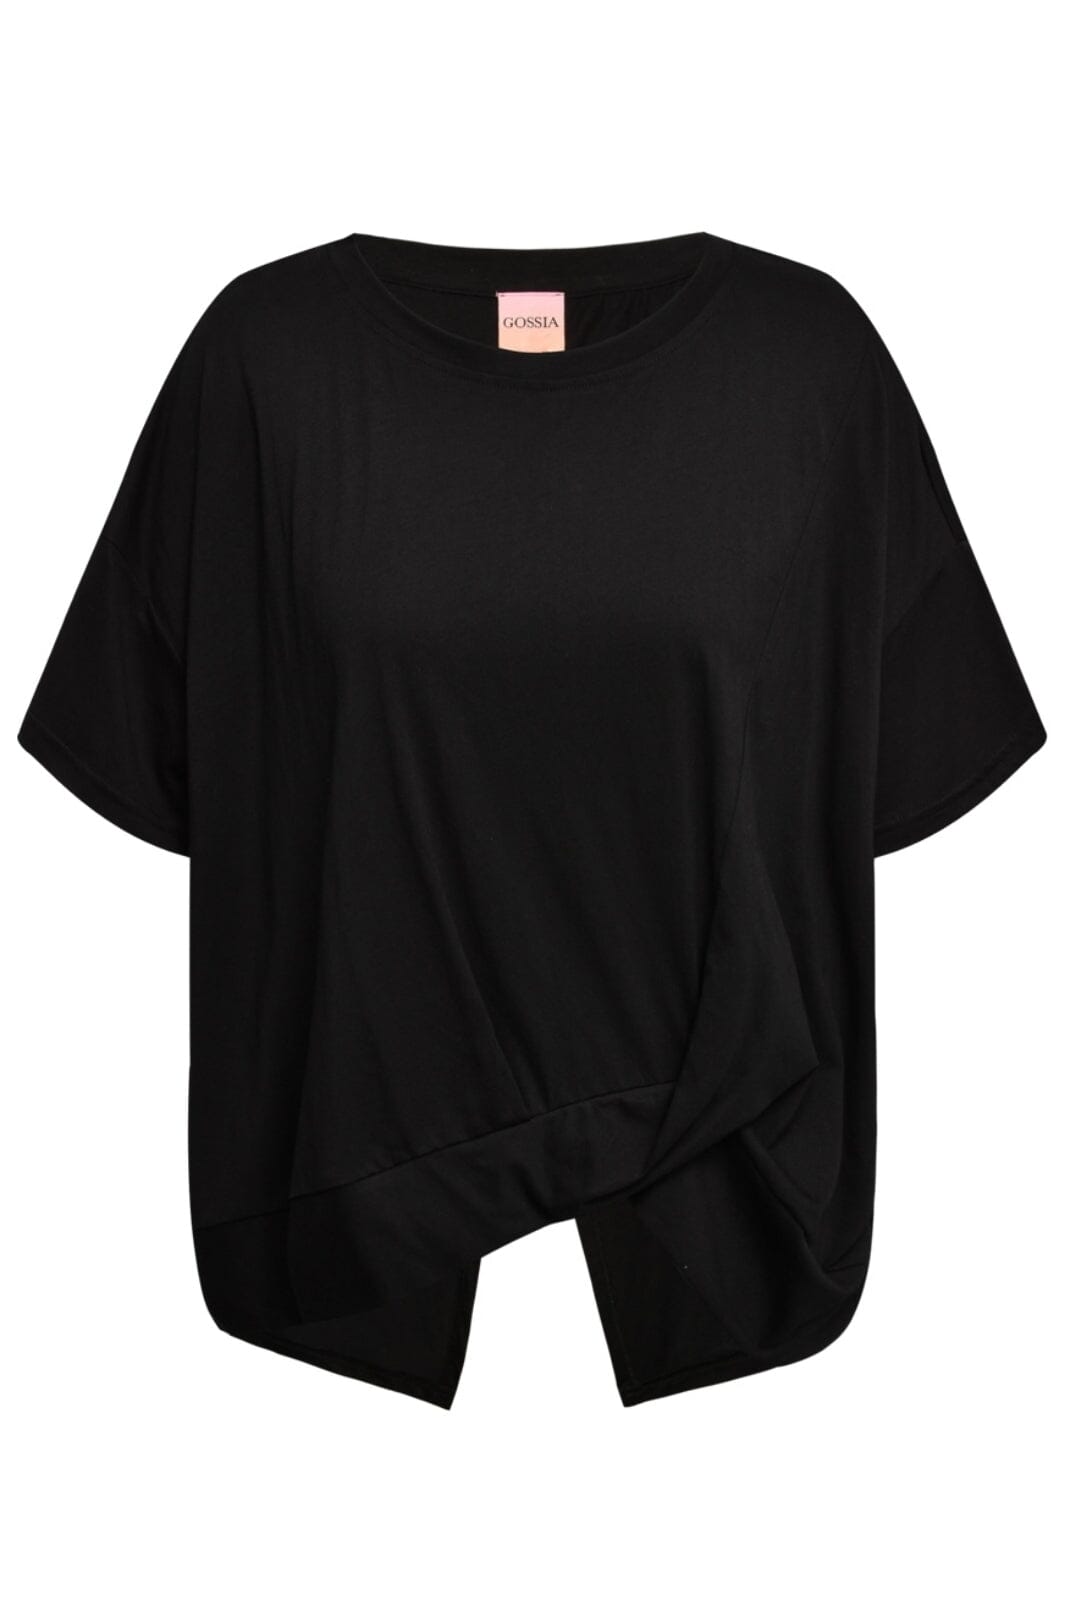 Gossia - MilaGO Tee - Black T-shirts 